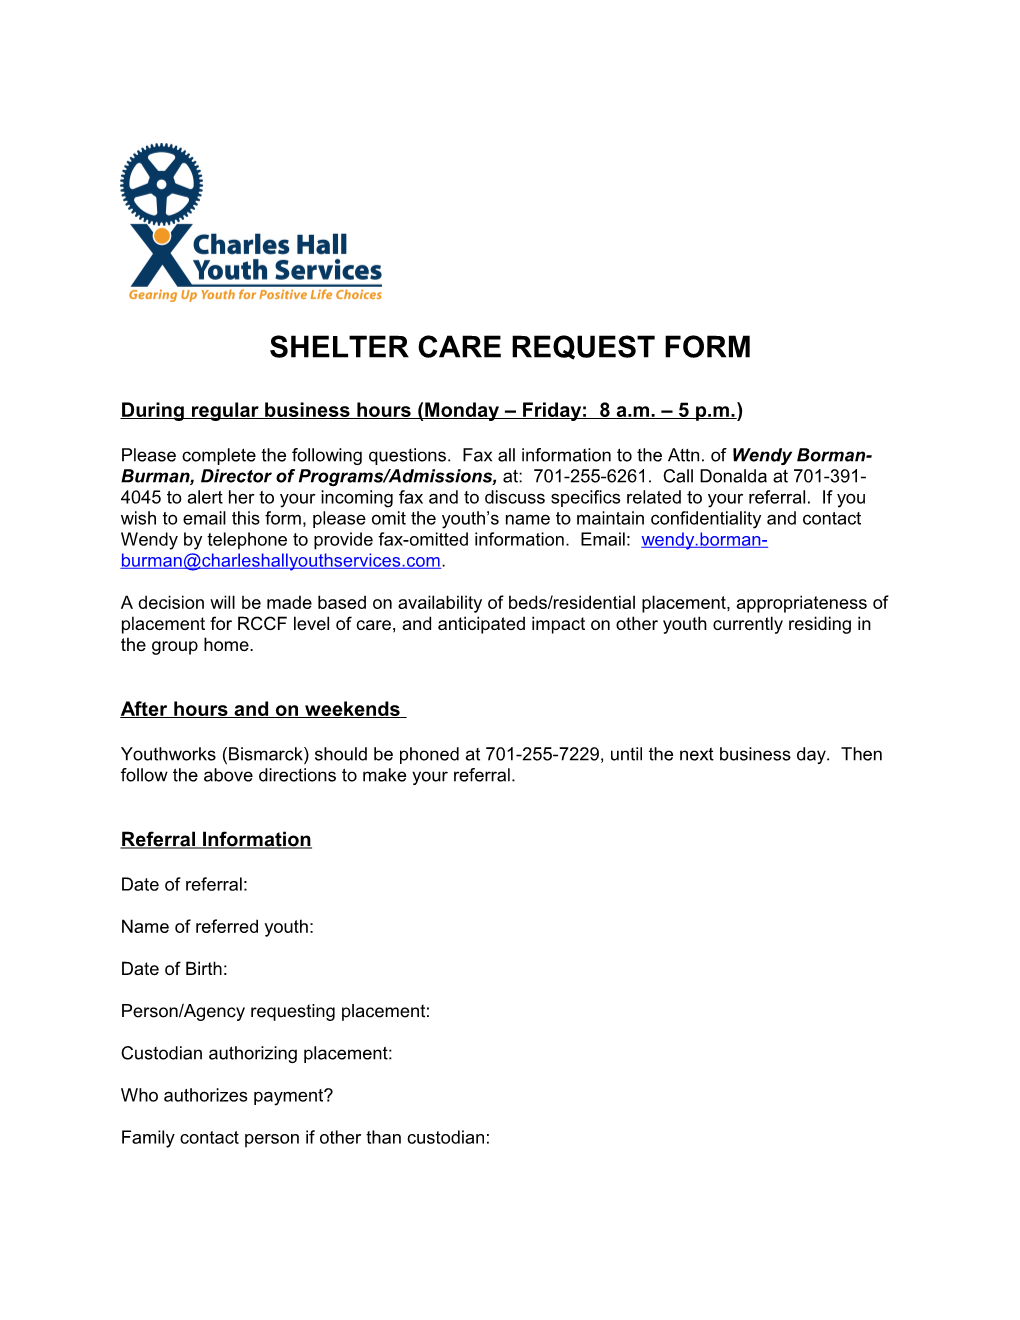 Shelter Care Request Form (Ver 12-21-09))